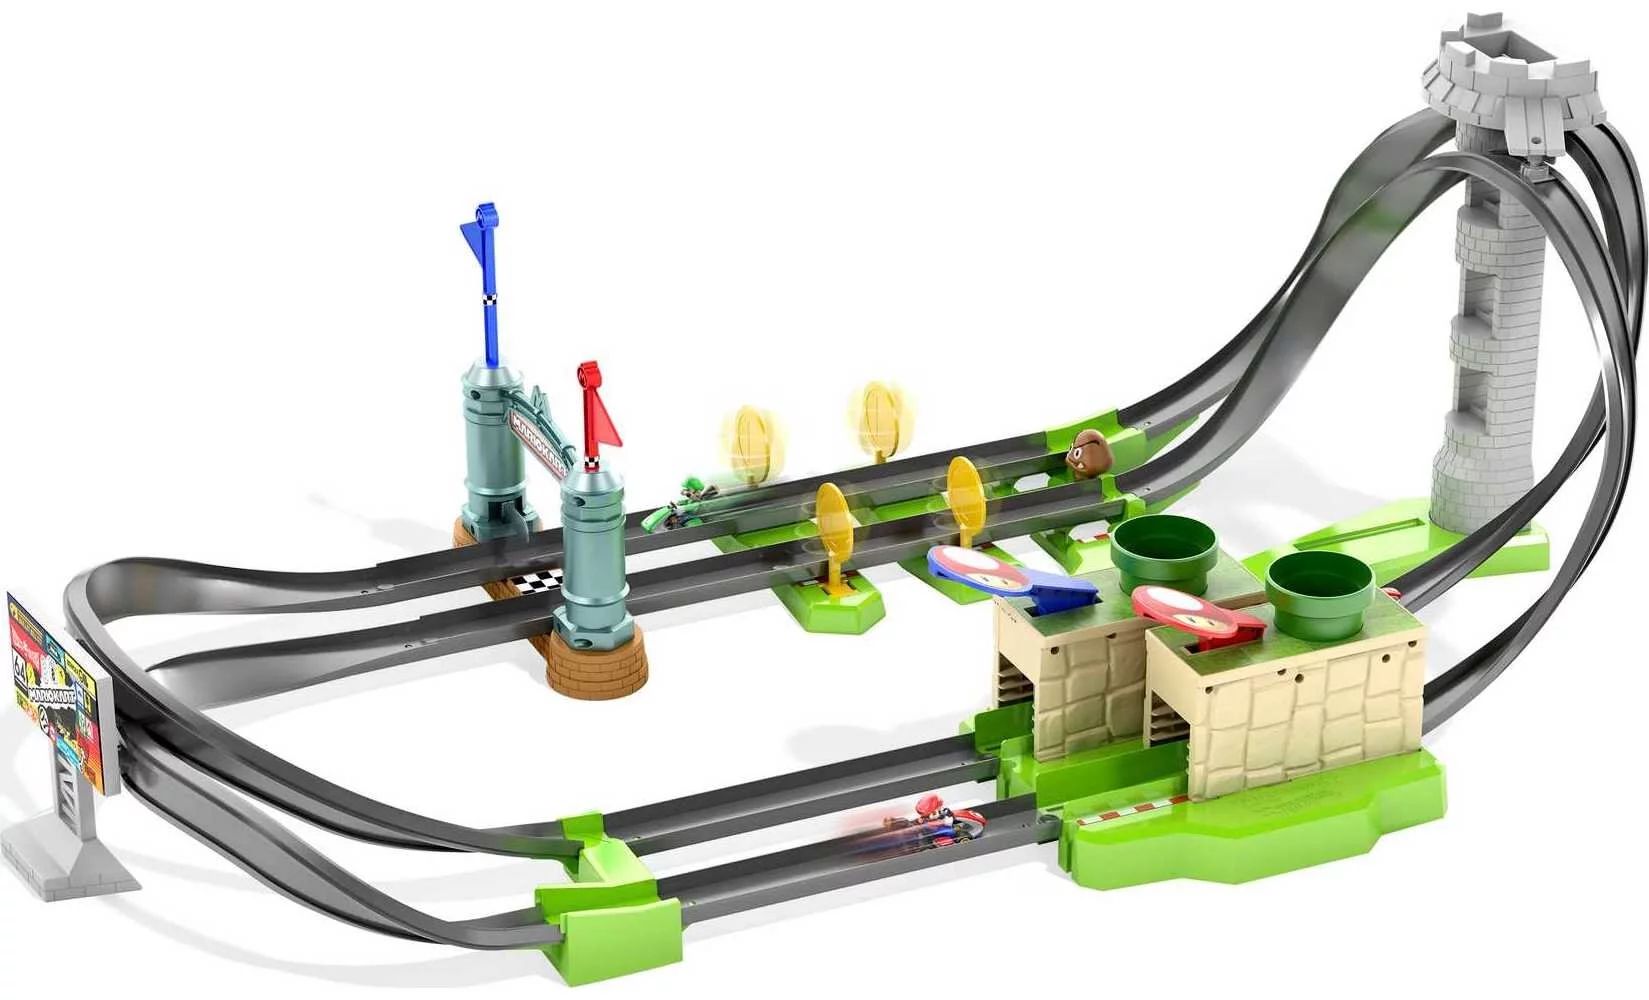 Hot Wheels Mario Kart Circuit Lite Track Set with 1:64 Scale Toy Die-Cast Kart Vehicle & Launcher | Walmart (US)